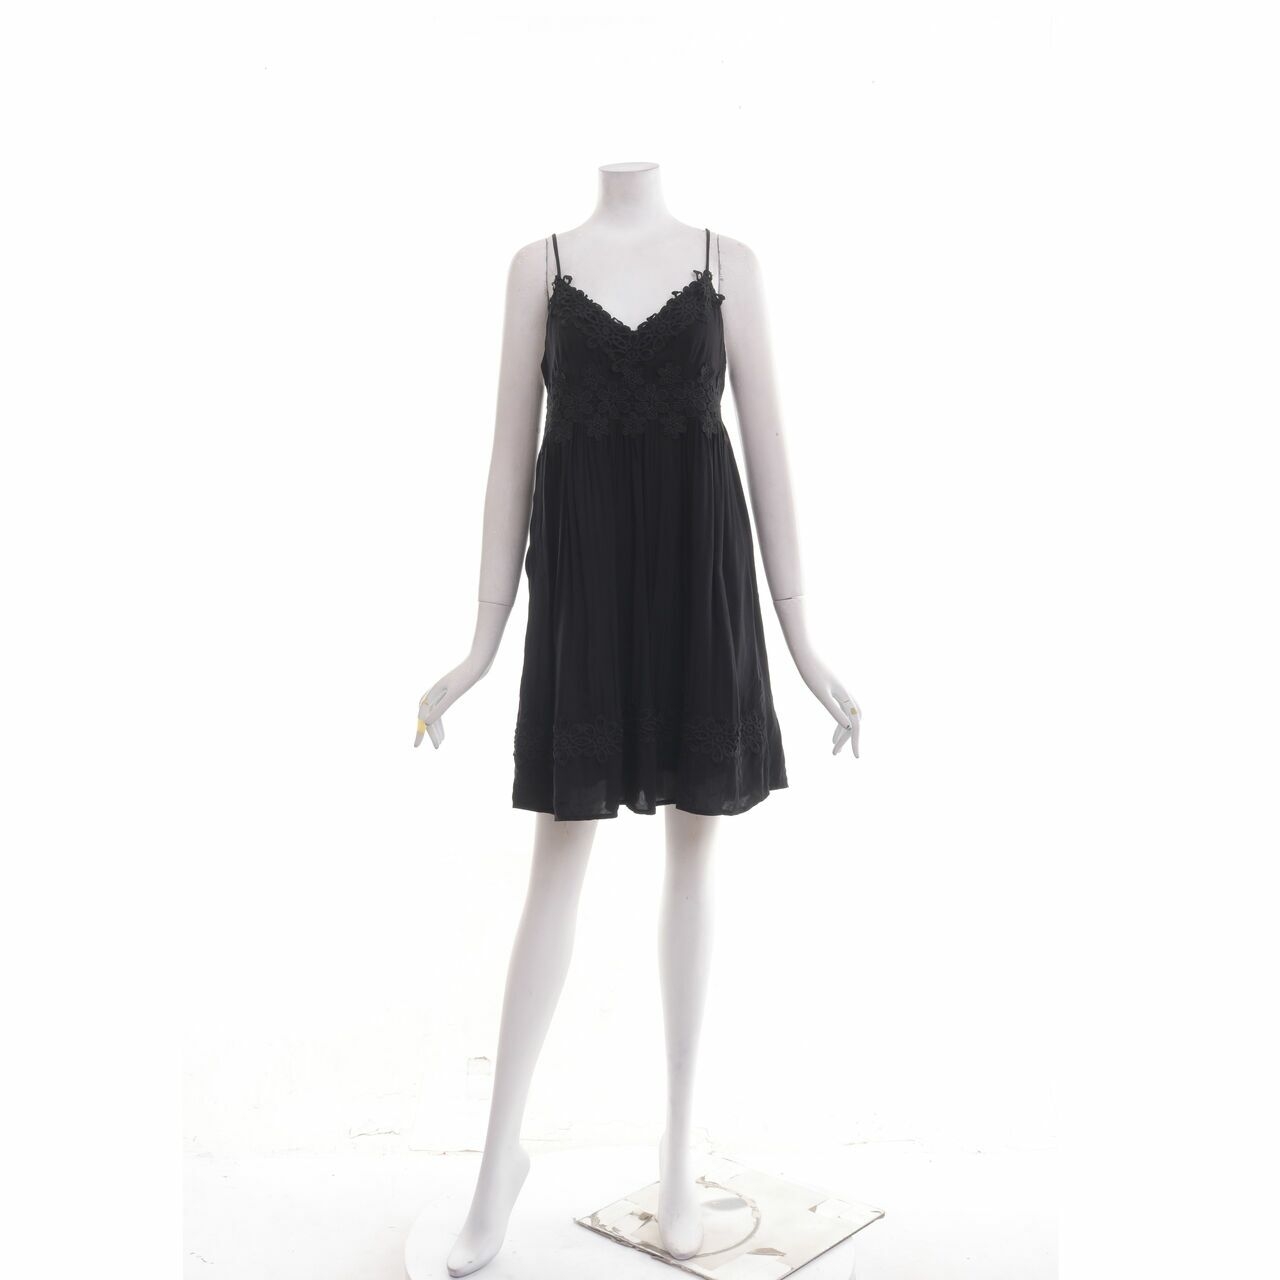 Topshop Black Mini Dress